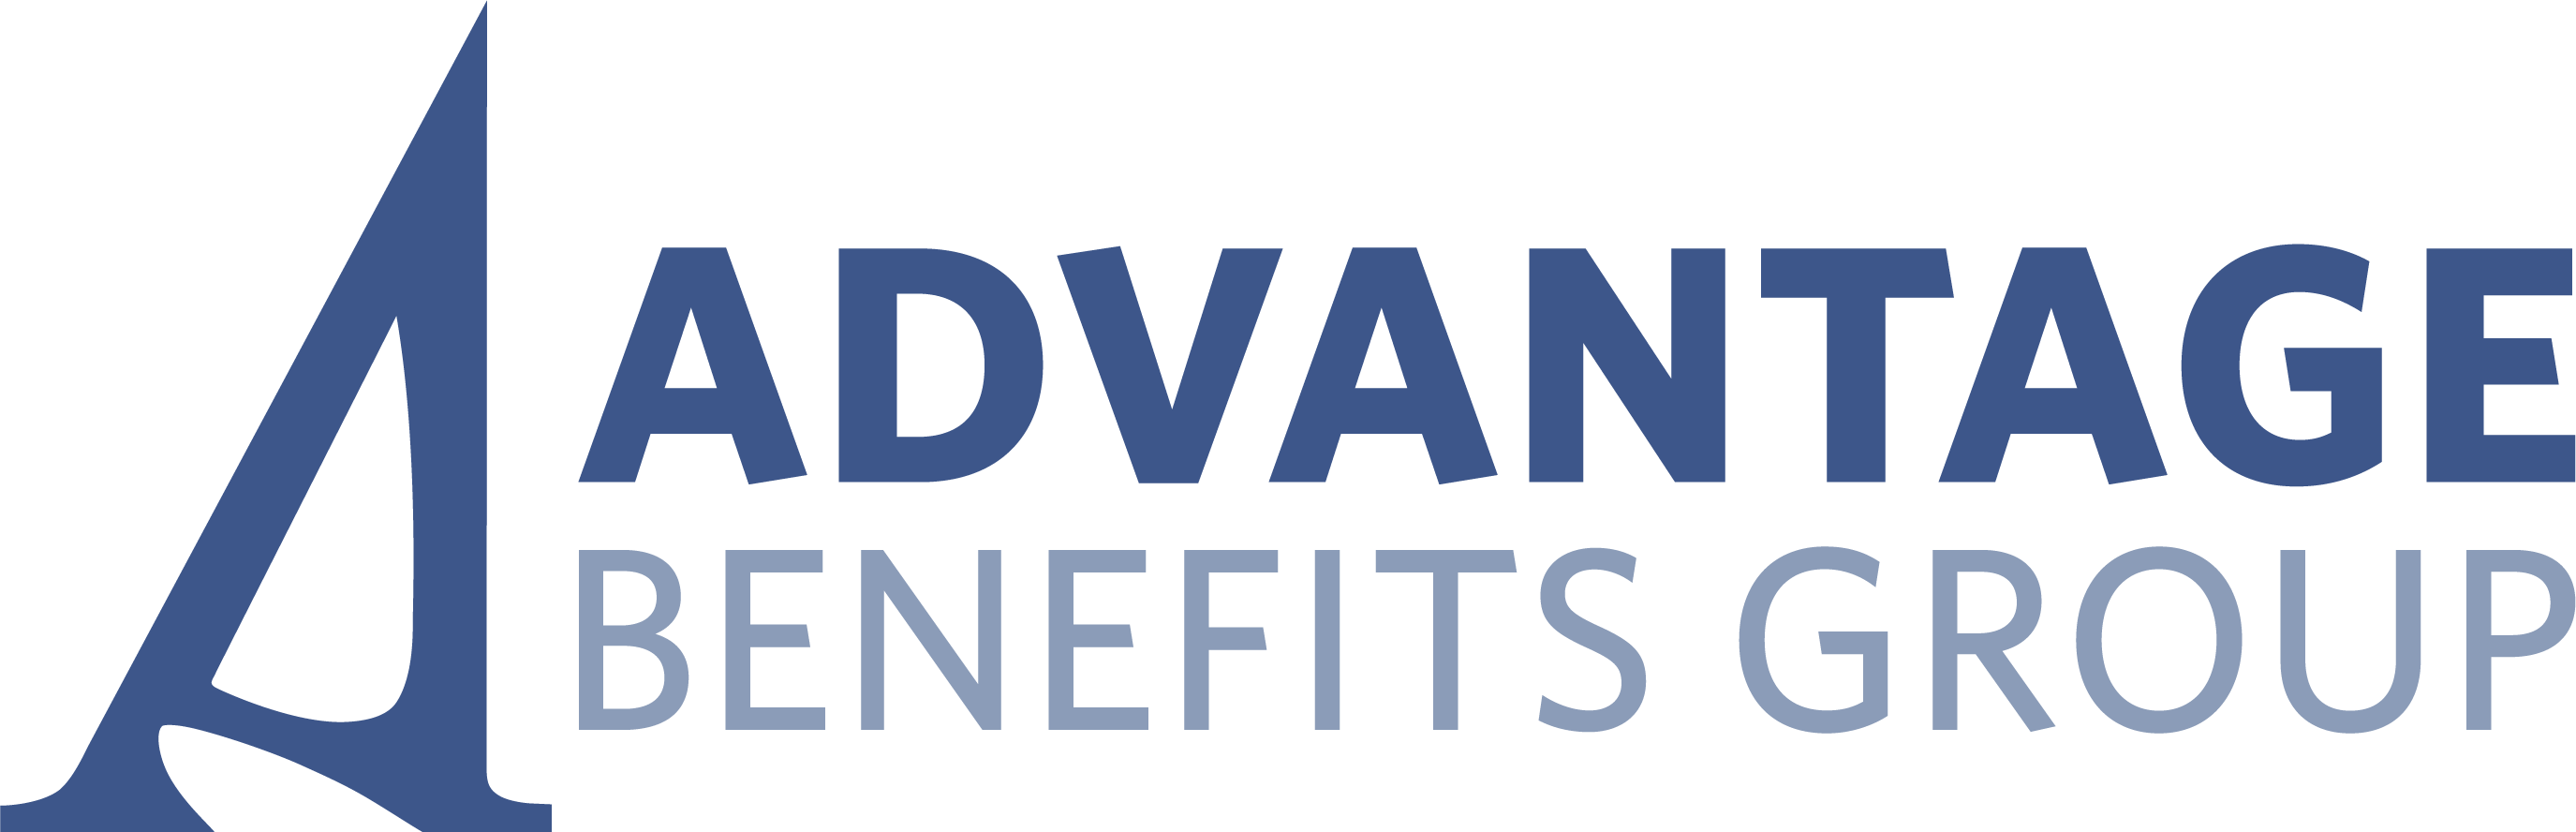 Advantage Benefits Group, Inc.